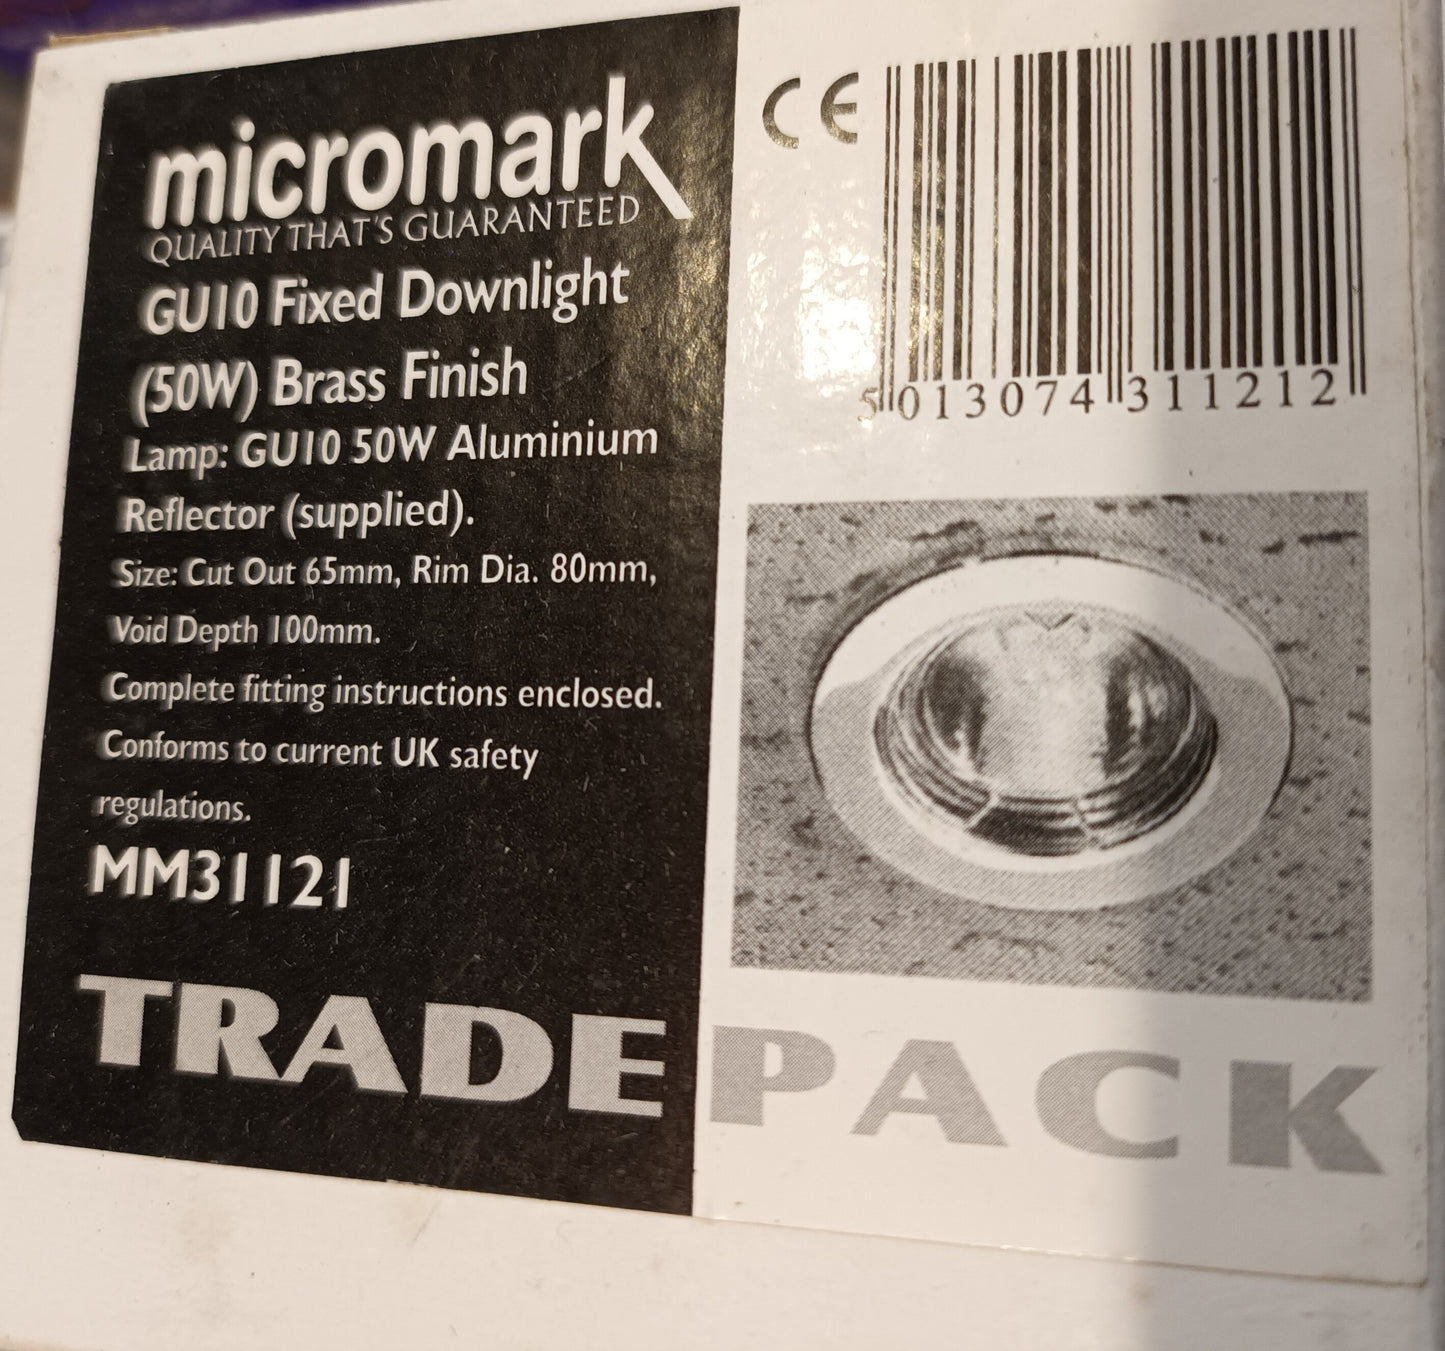 GU10 Fixed Brass Finish Downlight by Micromark